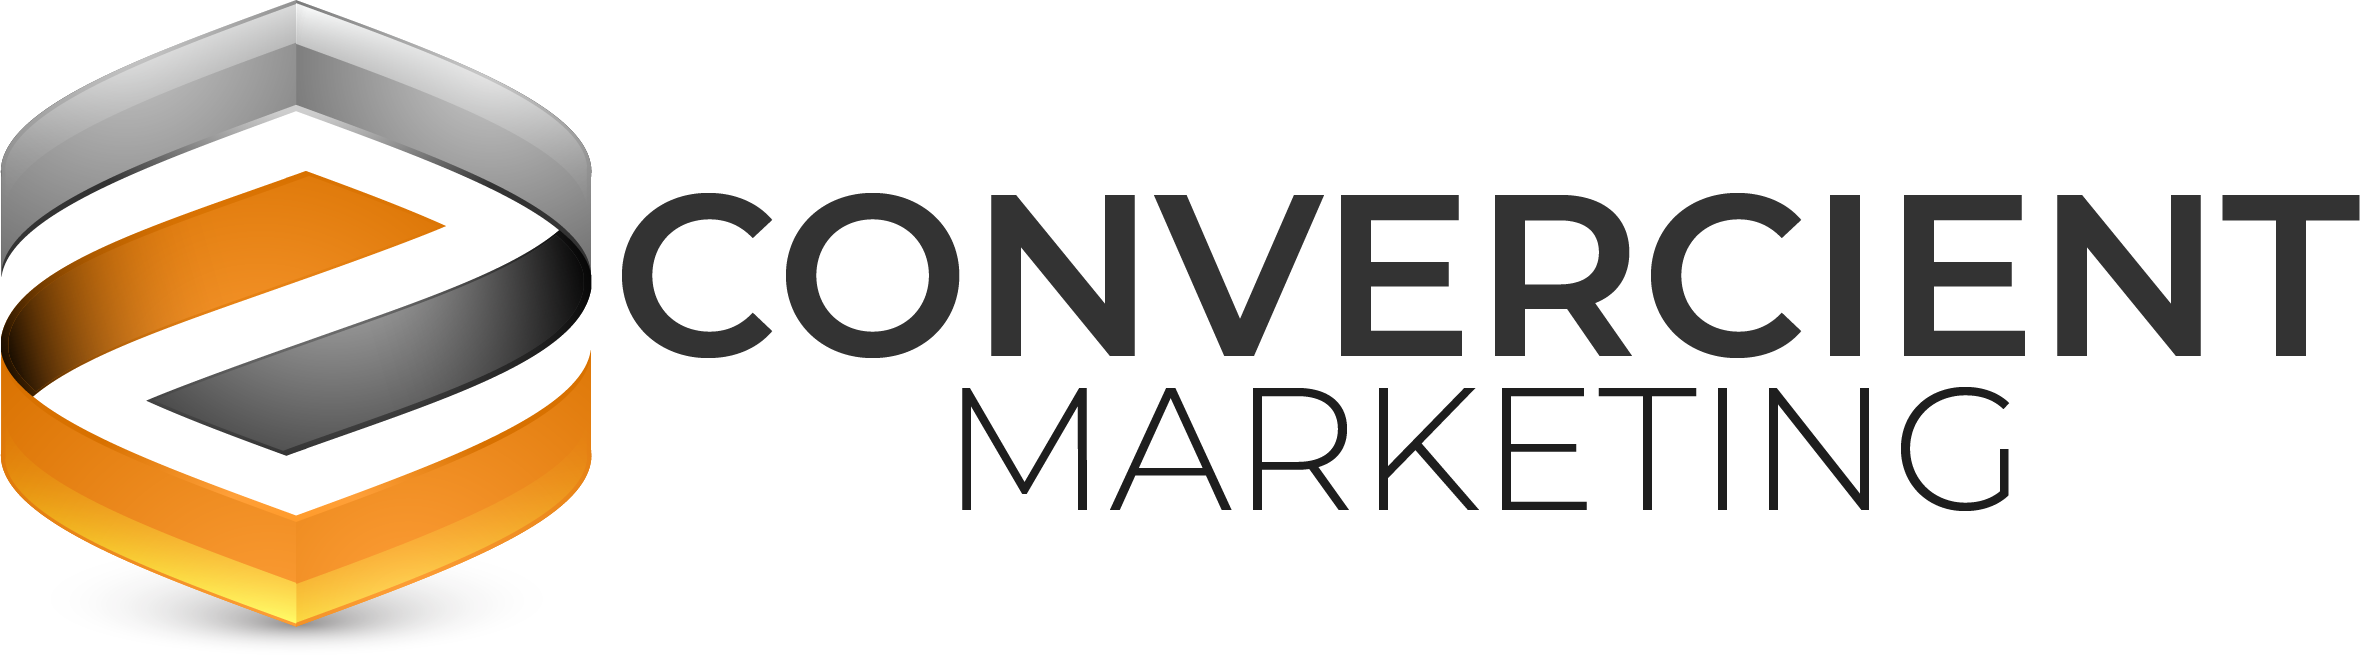 Convercient Marketing